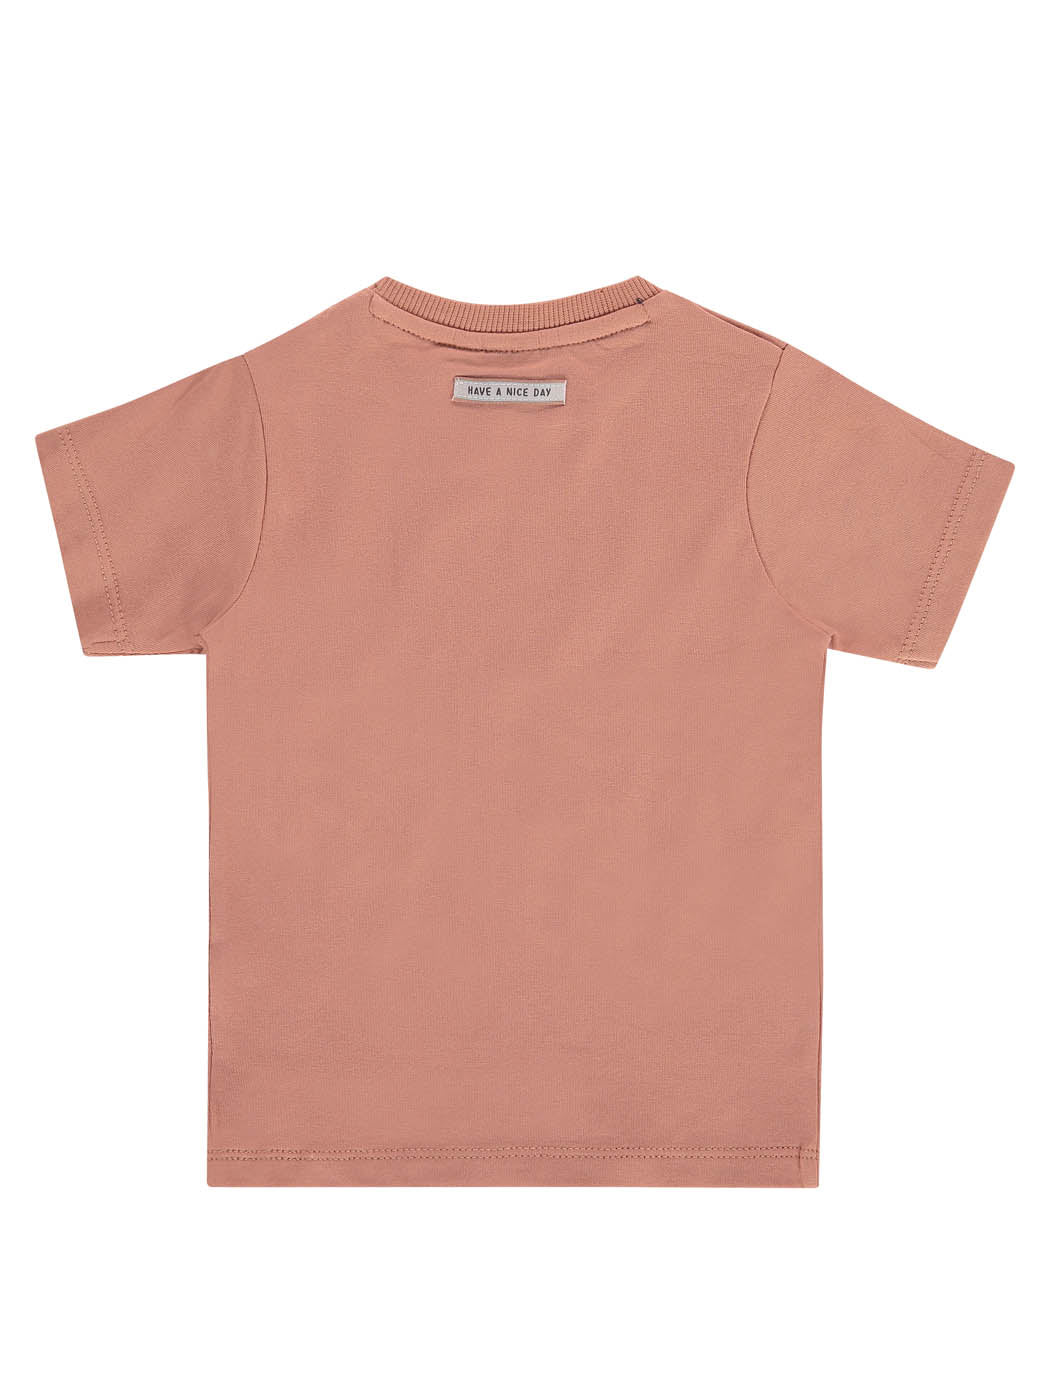 Babyface - Boy's T-Shirt - BBE21207653 Brown